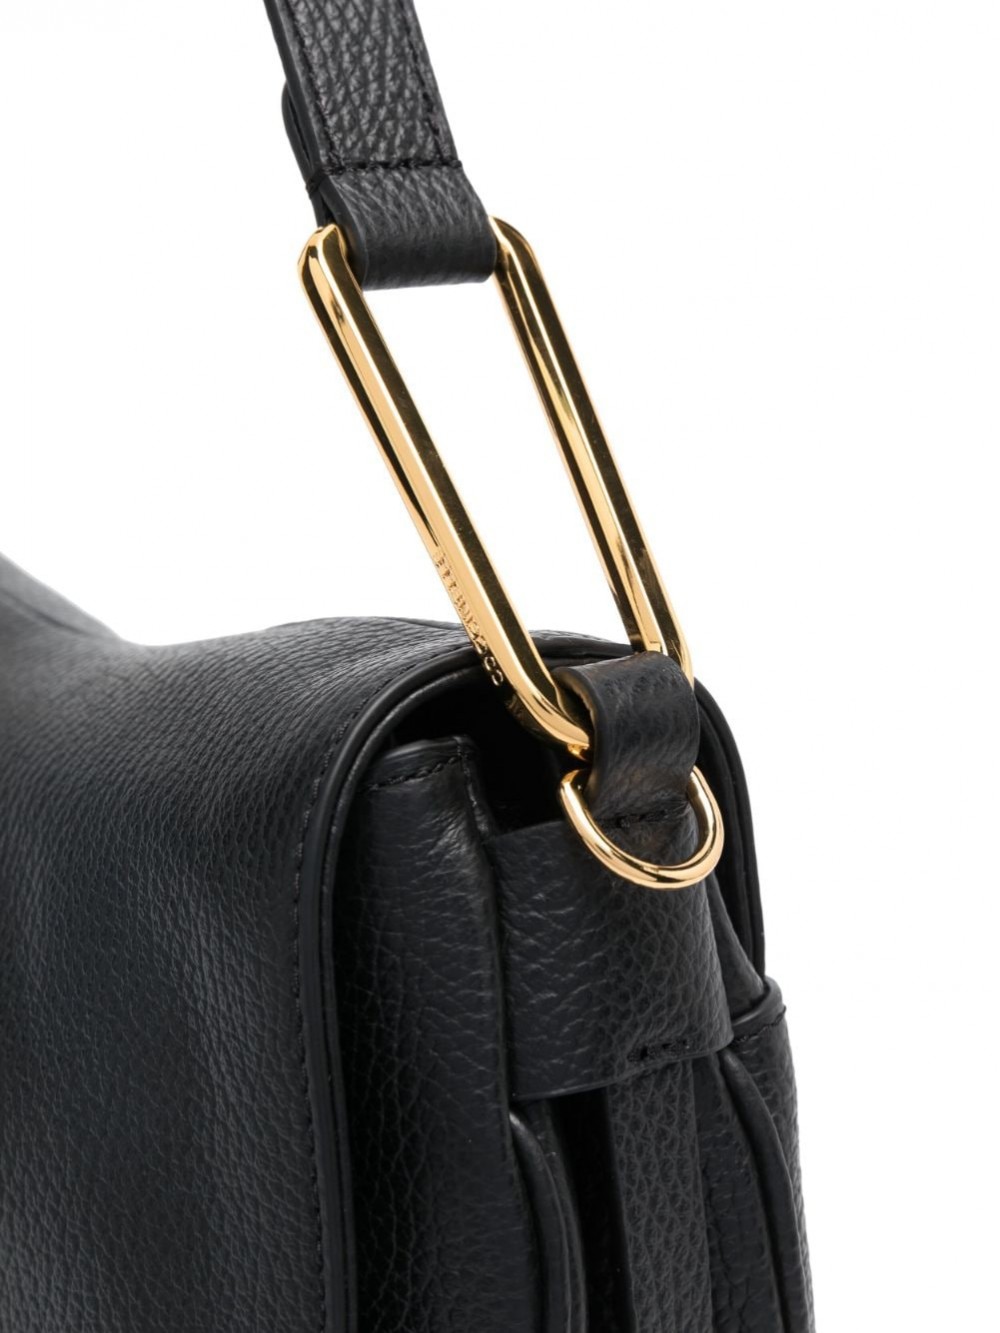 Michael Kors Enzo small black shoulder bag Home